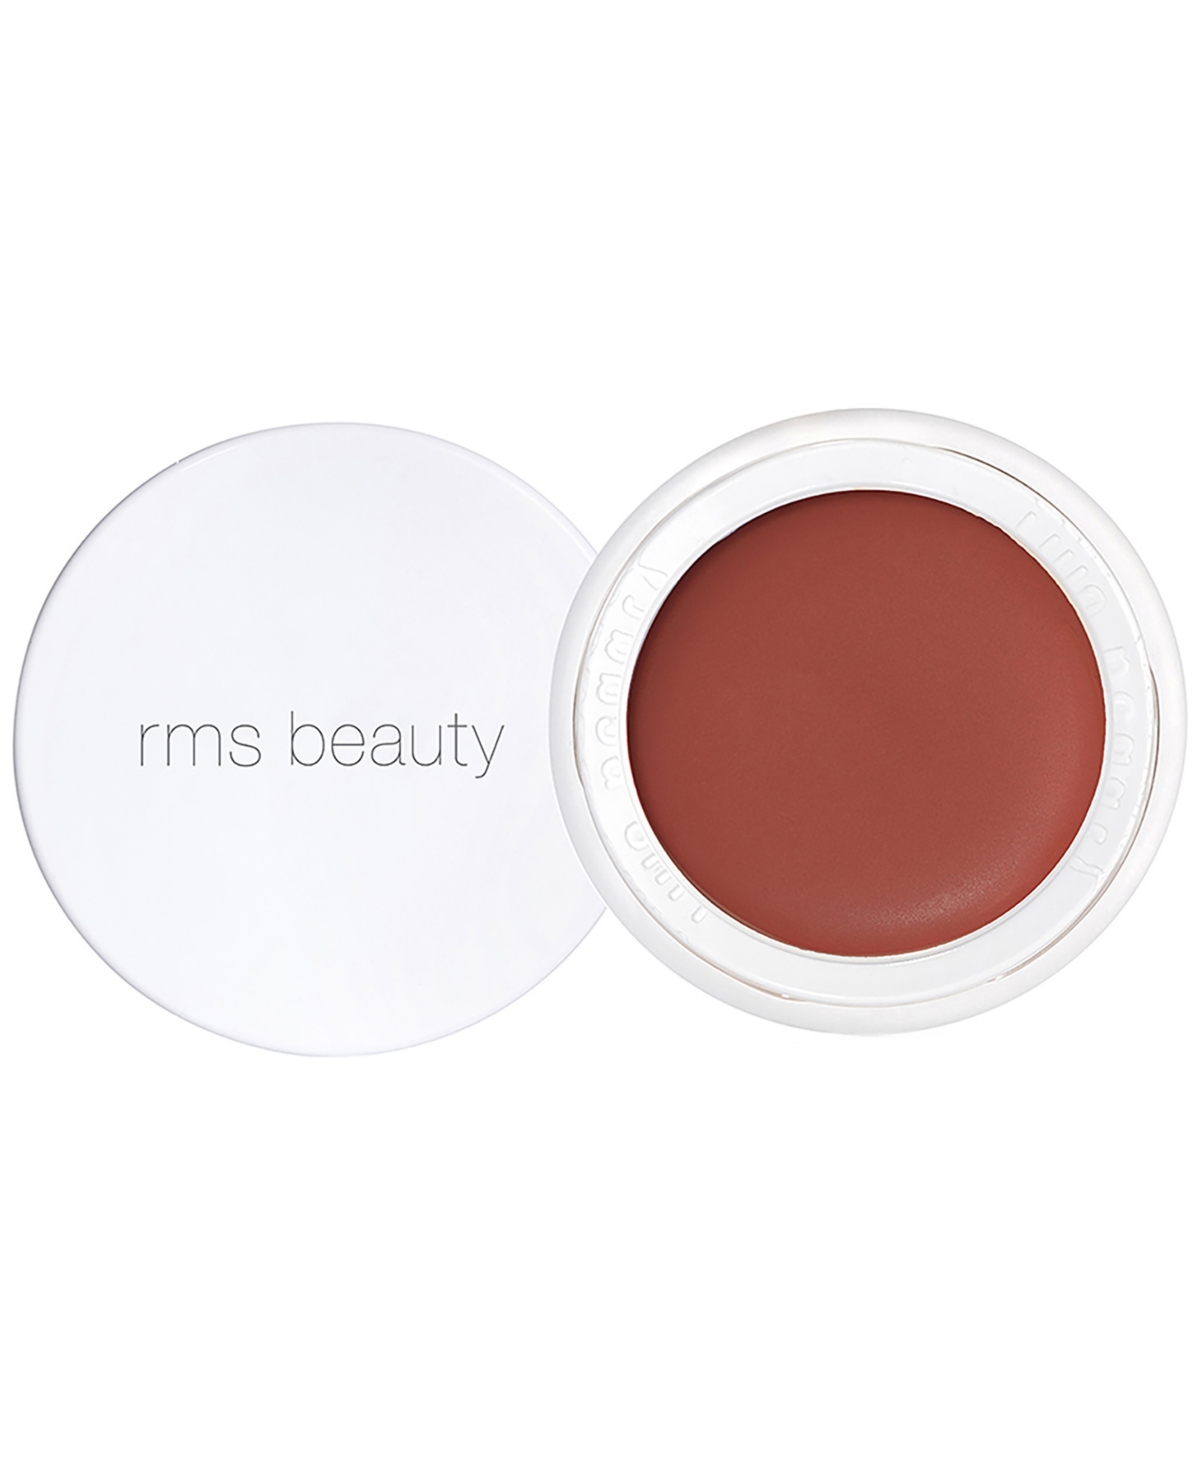 Rms Beauty Lip2cheek In Illusive